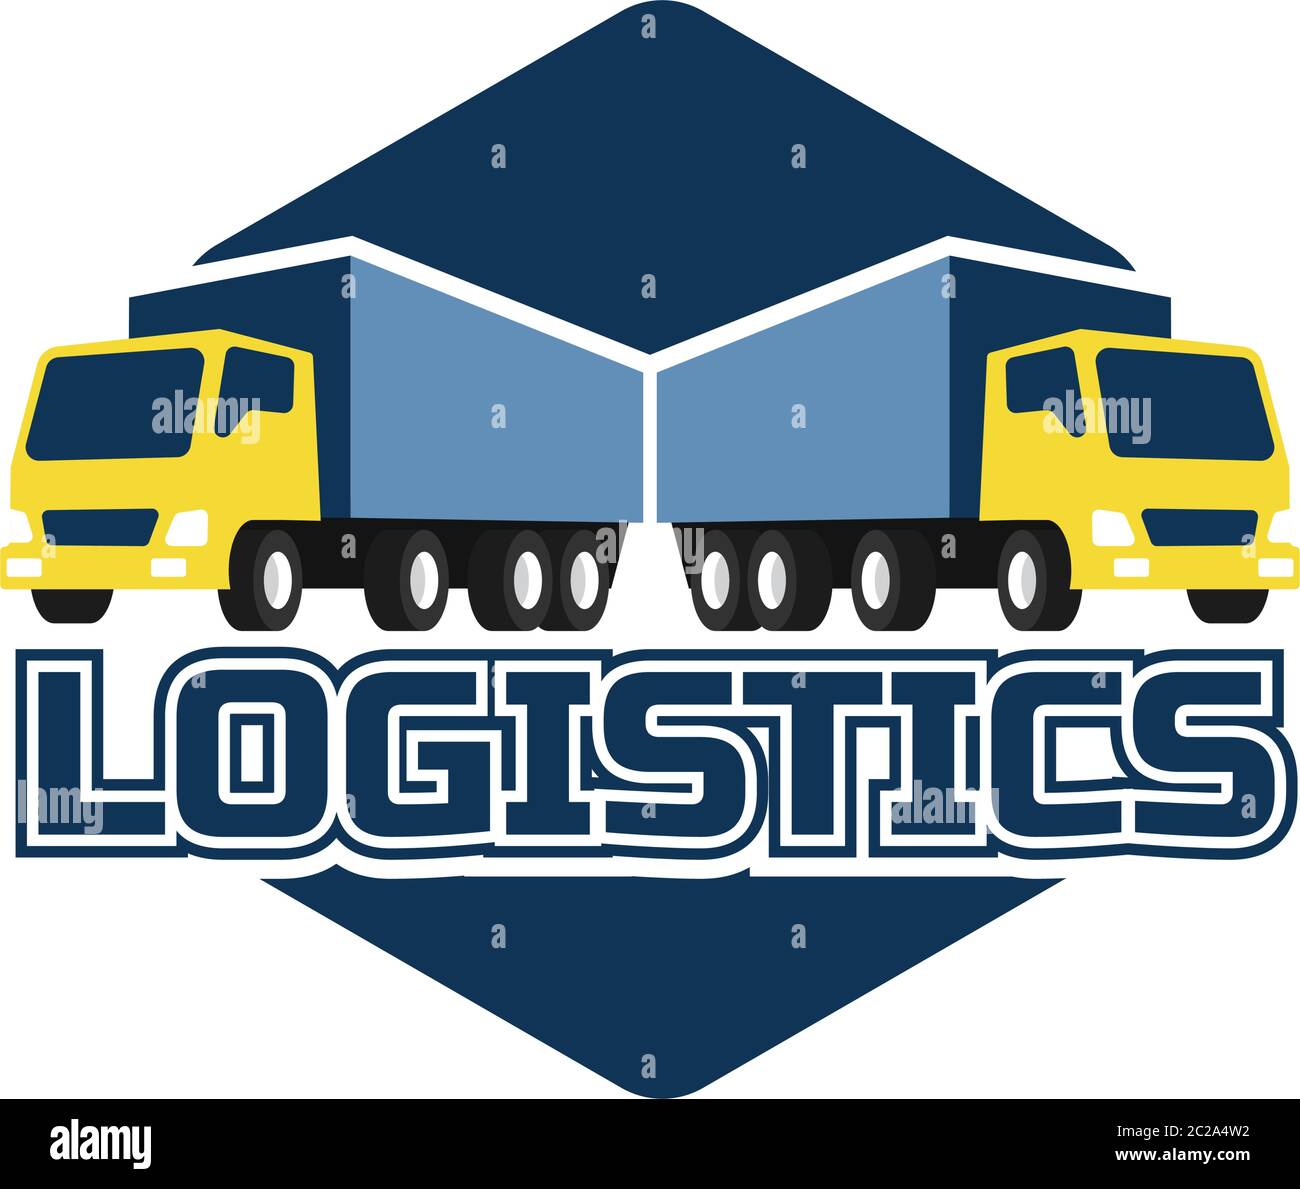 Logistics Logos Starting With A